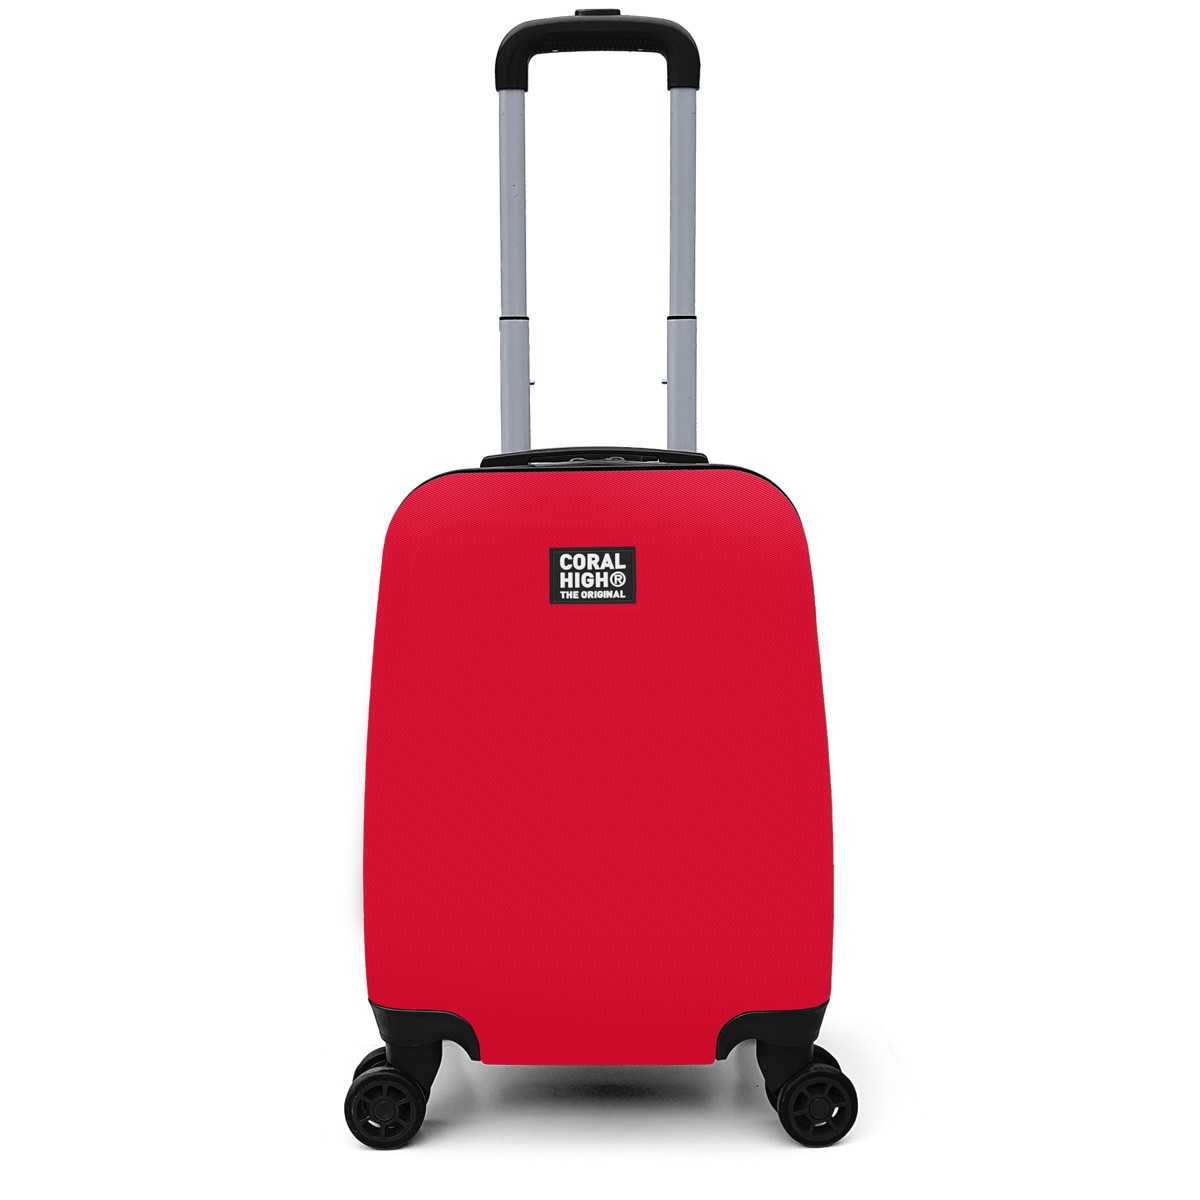 Coral High Kırmızı Mini Kabin Valizi 16509